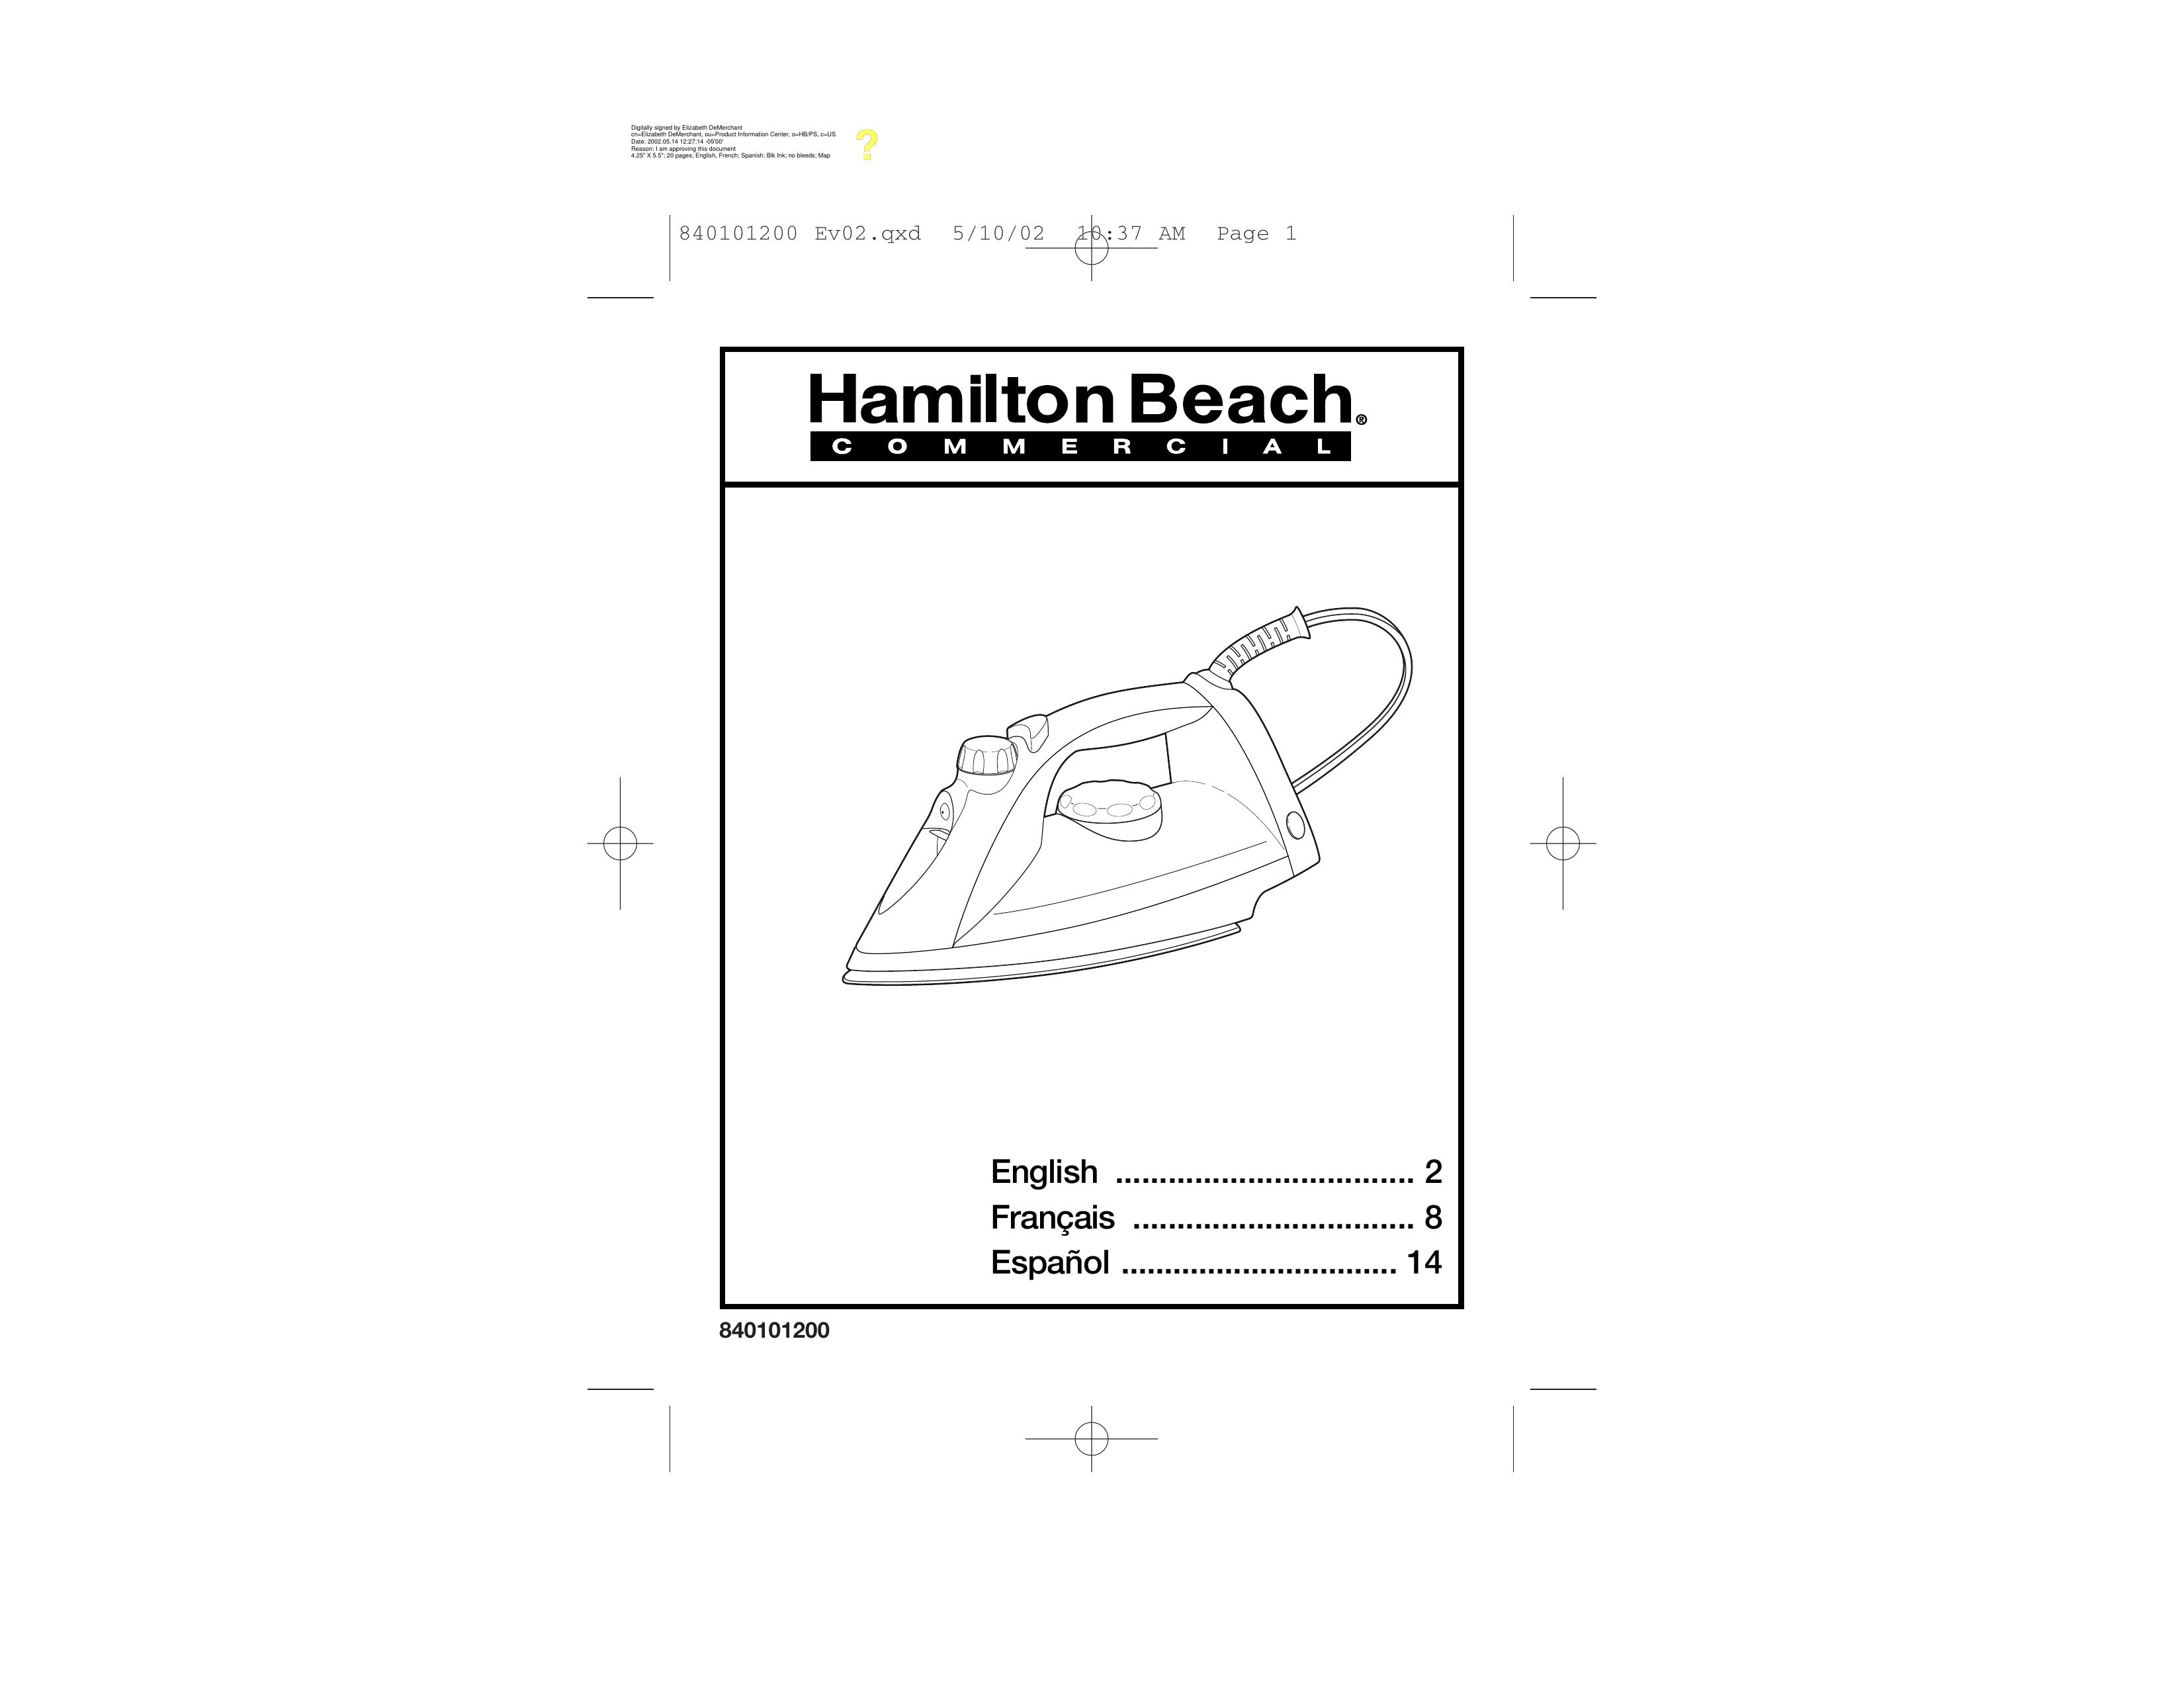 Hamilton Beach 840101200 Iron User Manual